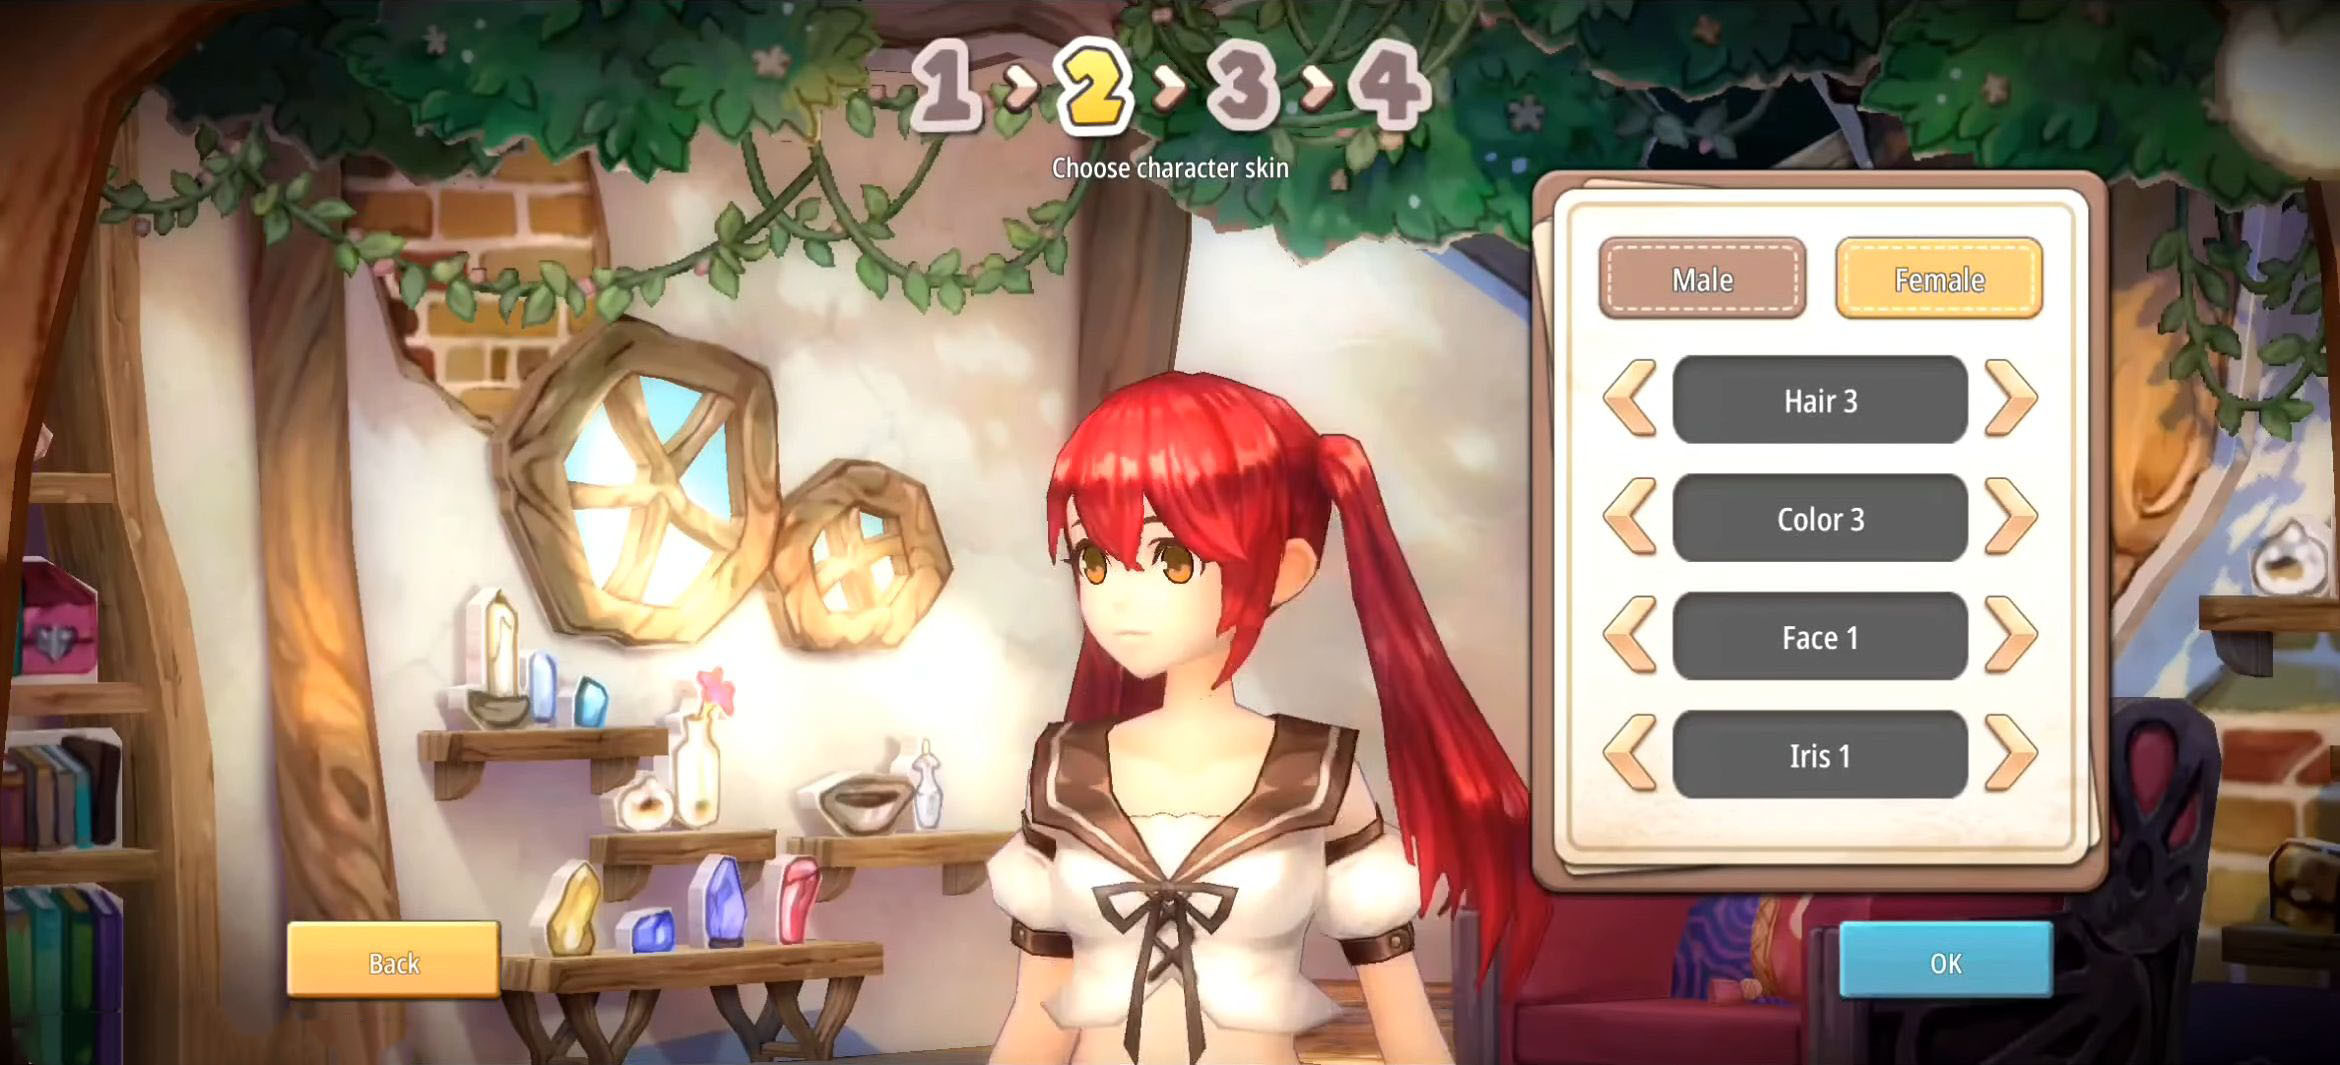 Sprite Fantasia - MMORPG - Android game screenshots.